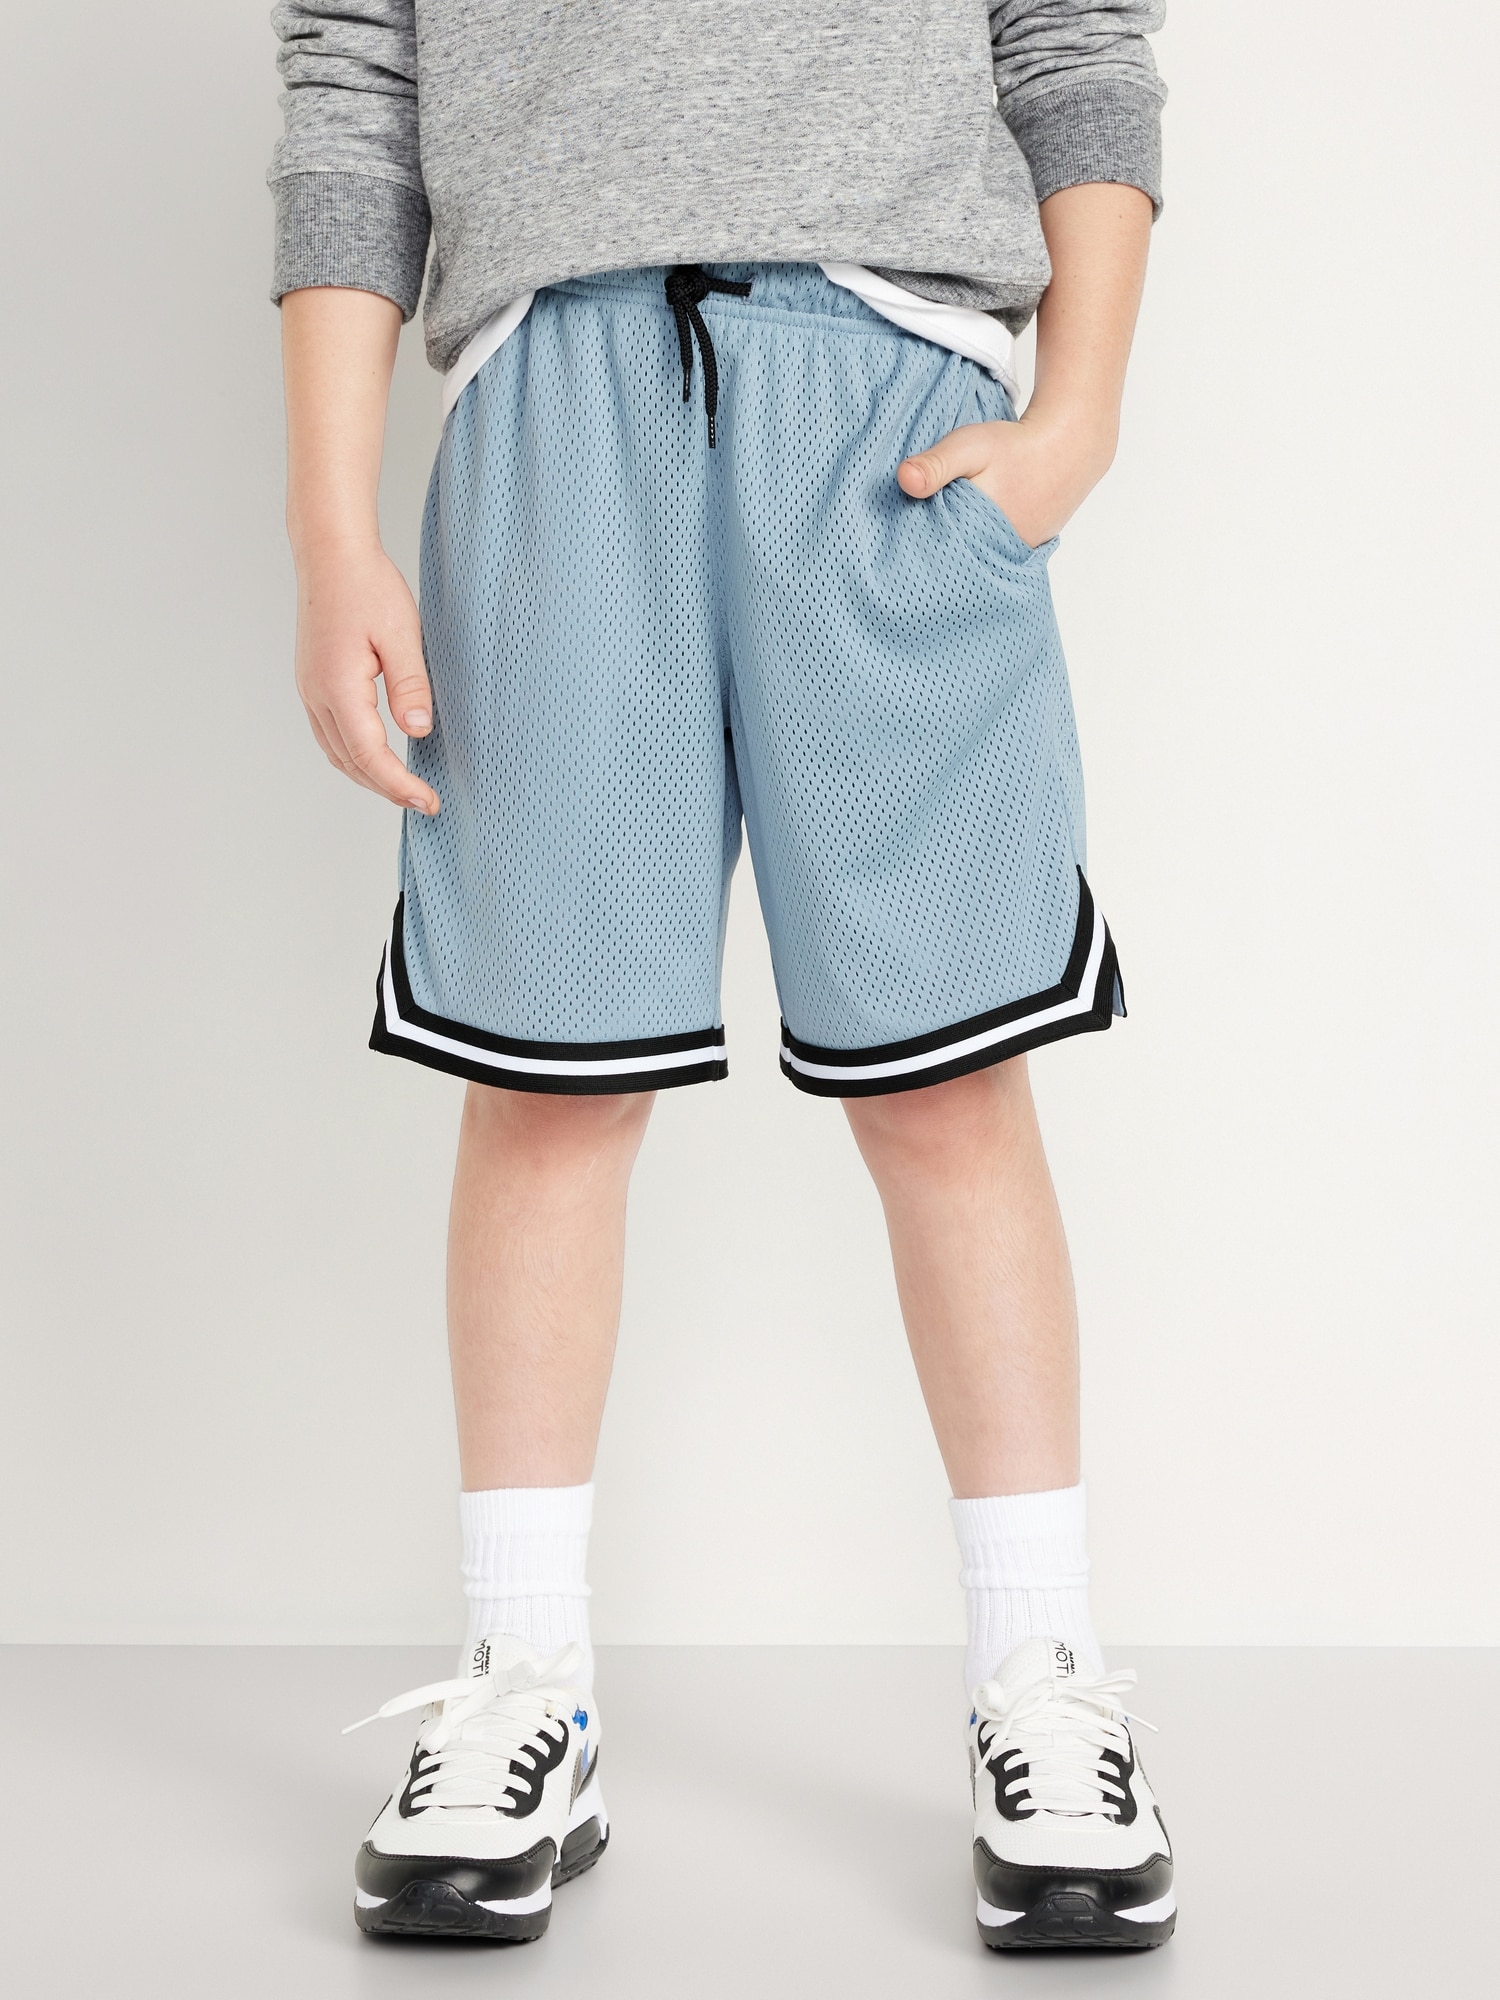 Mesh Basketball Shorts for Boys